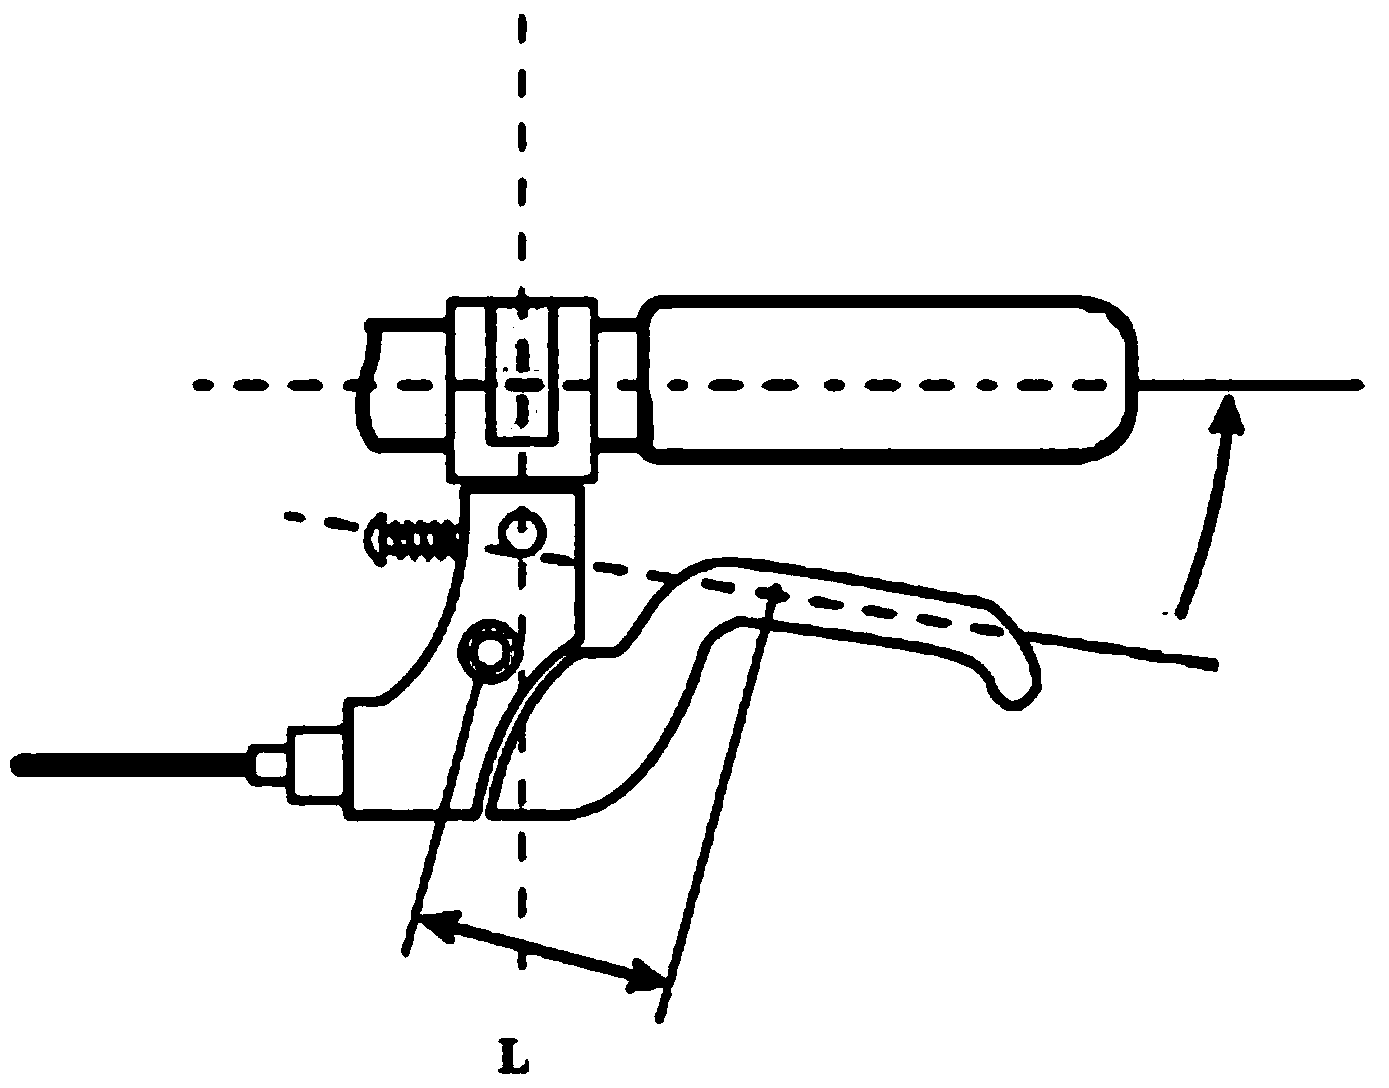 Labor-saving brake handle device